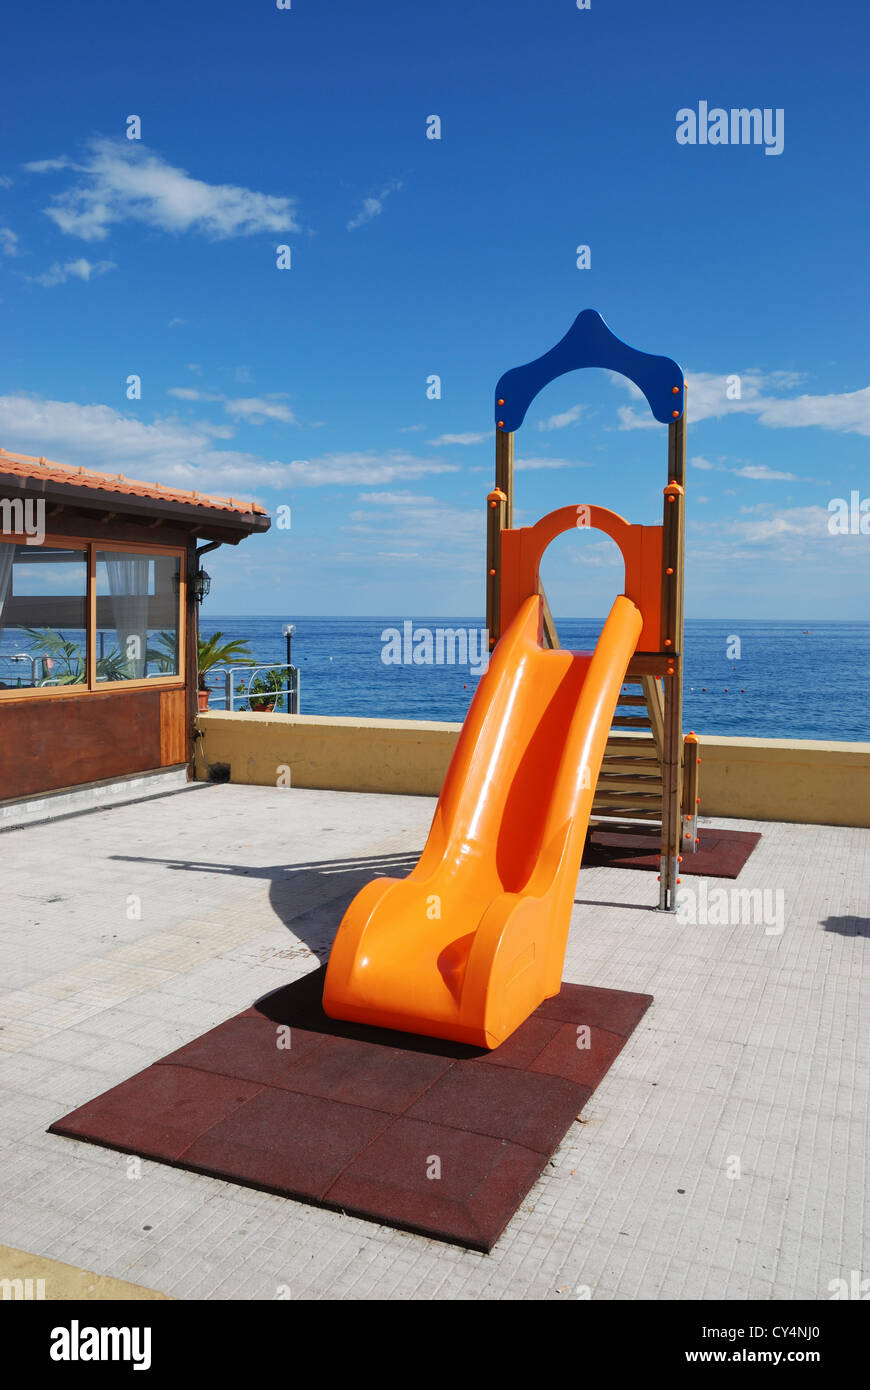 A playground slide at Letojanni, Sicily, Italy. Stock Photo